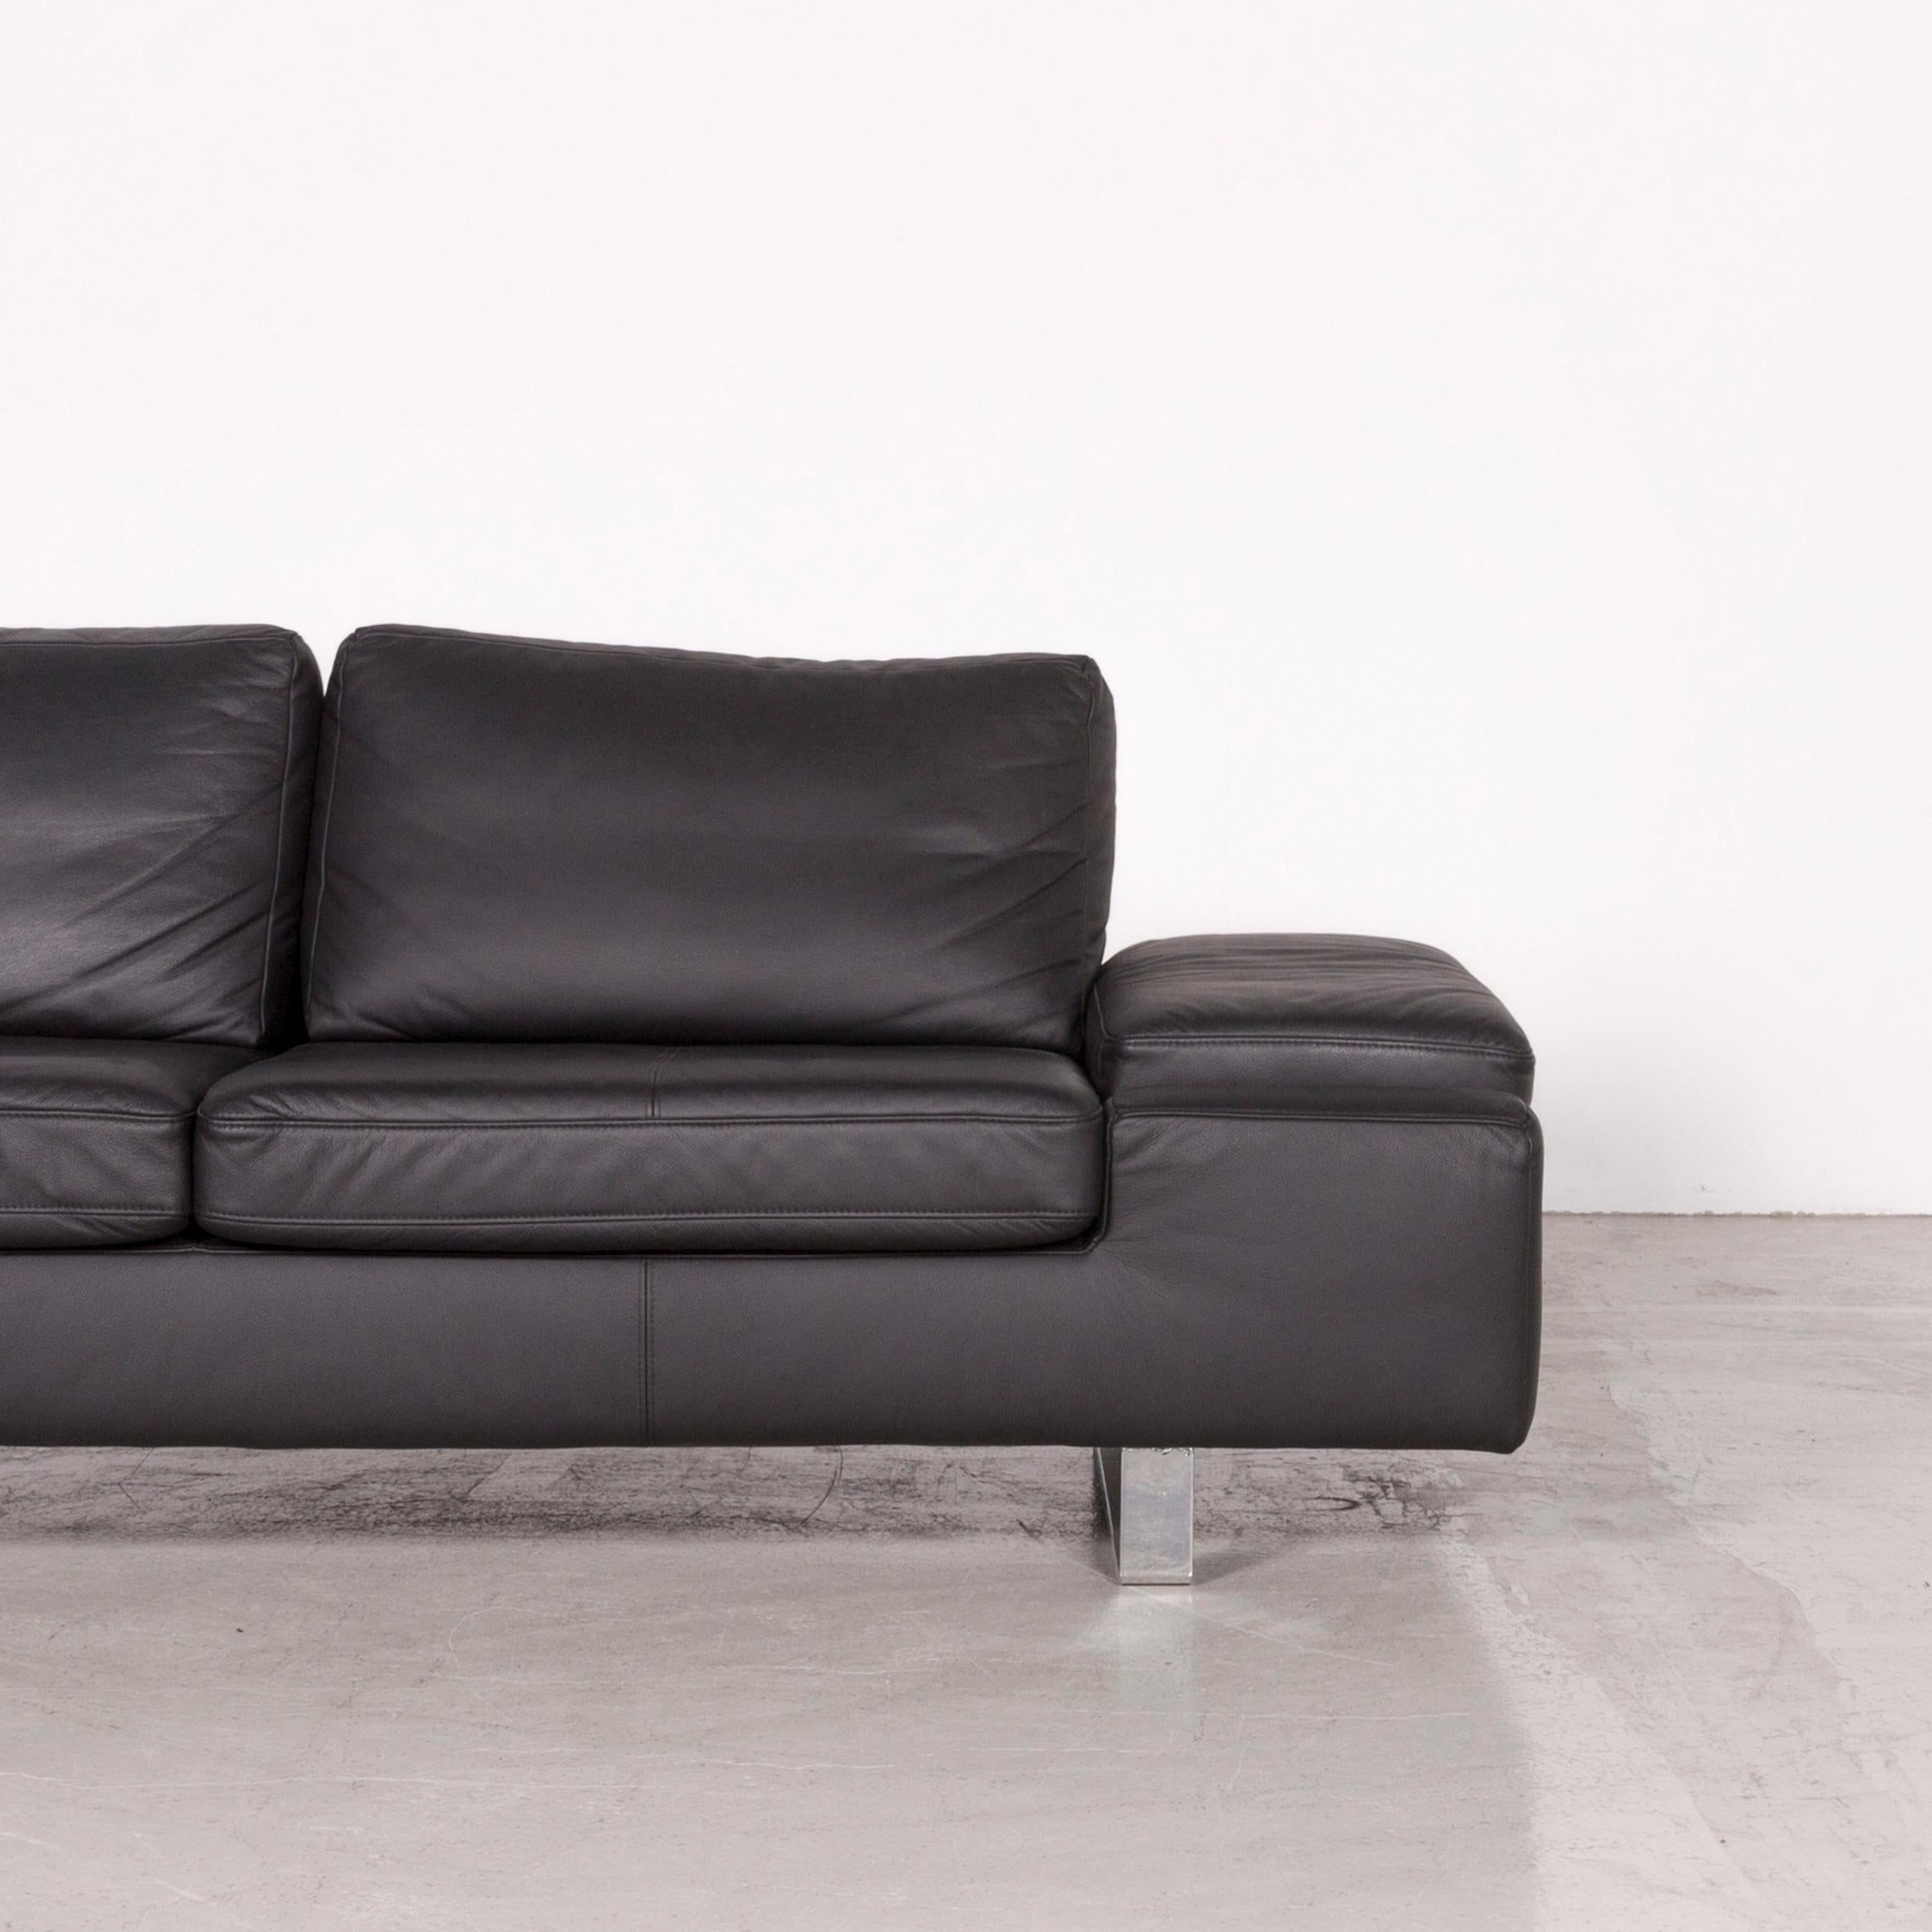 Arte M Designer Leather Sofa Black Three-Seat Couch Modern For Sale 2